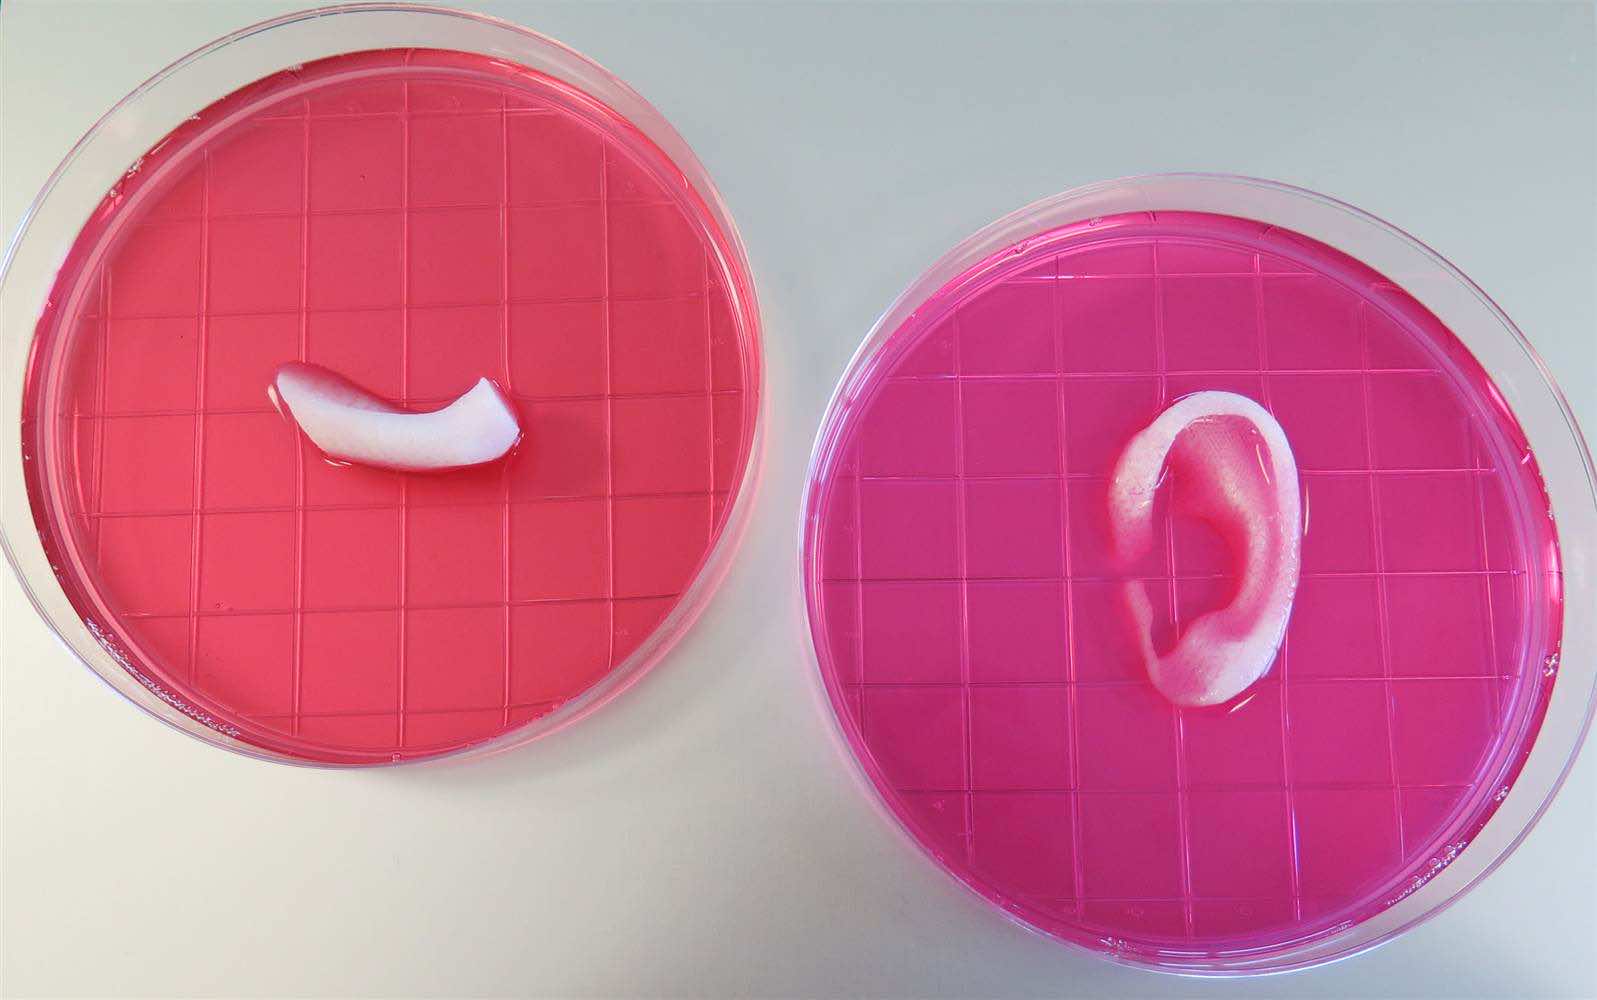 Latest 3D Bio Printer Can Make Body Parts That Are ‘Alive’ 2